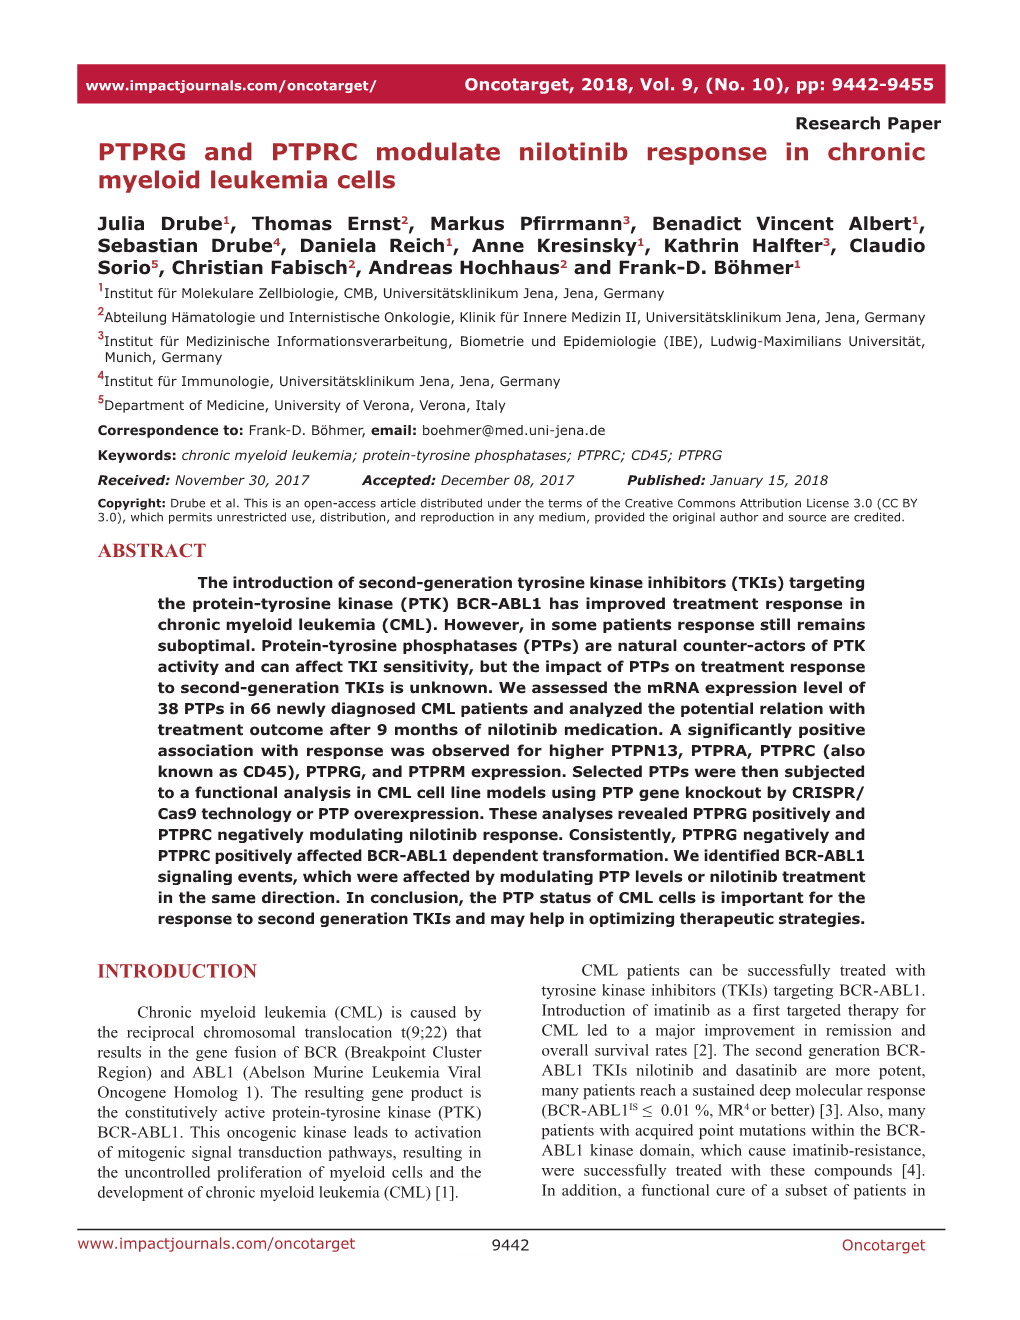 PTPRG and PTPRC Modulate Nilotinib Response in Chronic Myeloid Leukemia Cells